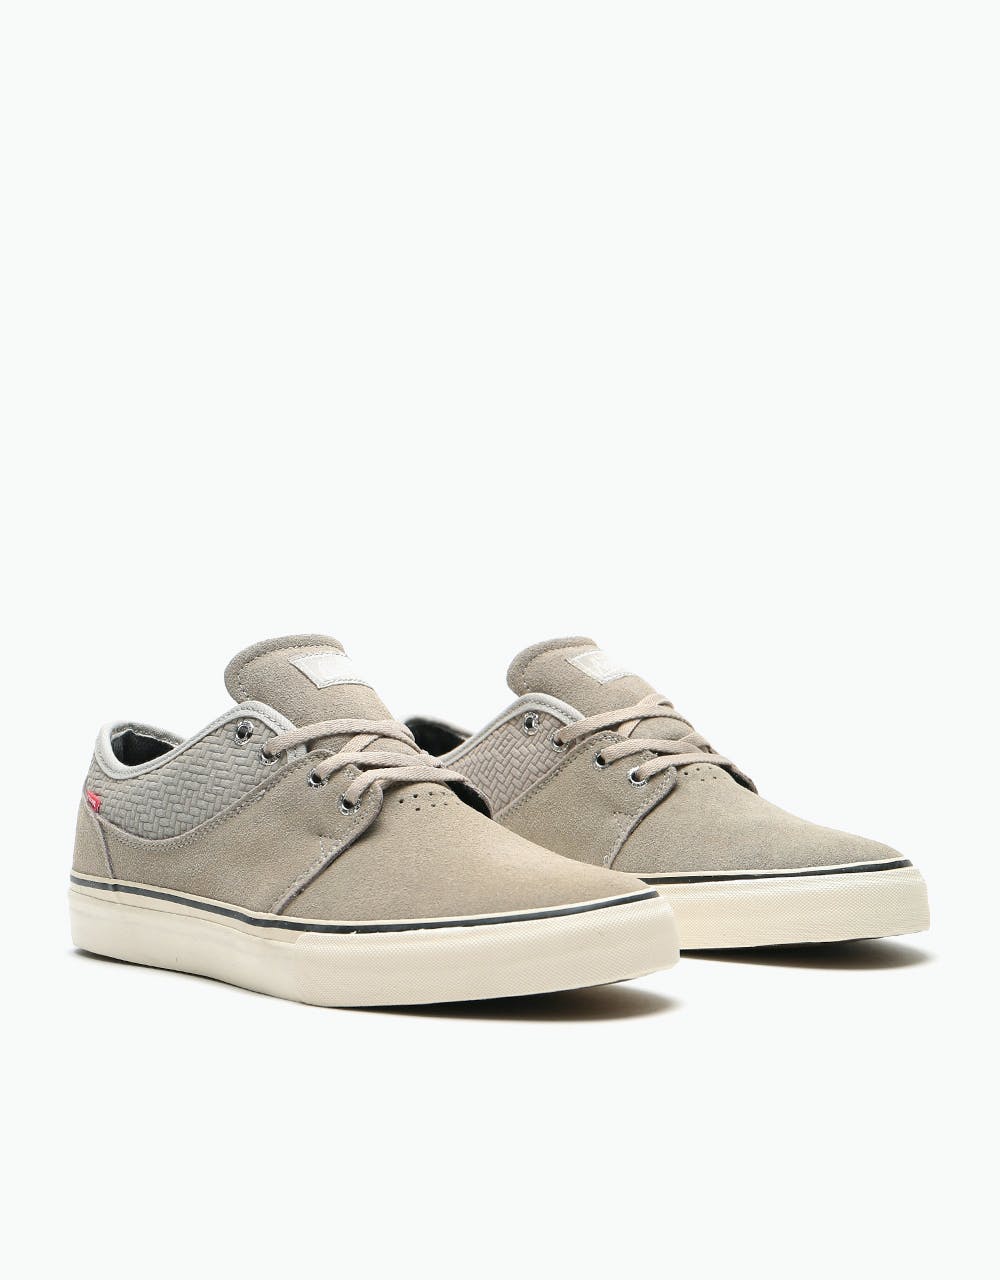 Globe Mahalo Skate Shoes - Warm Grey/Woven